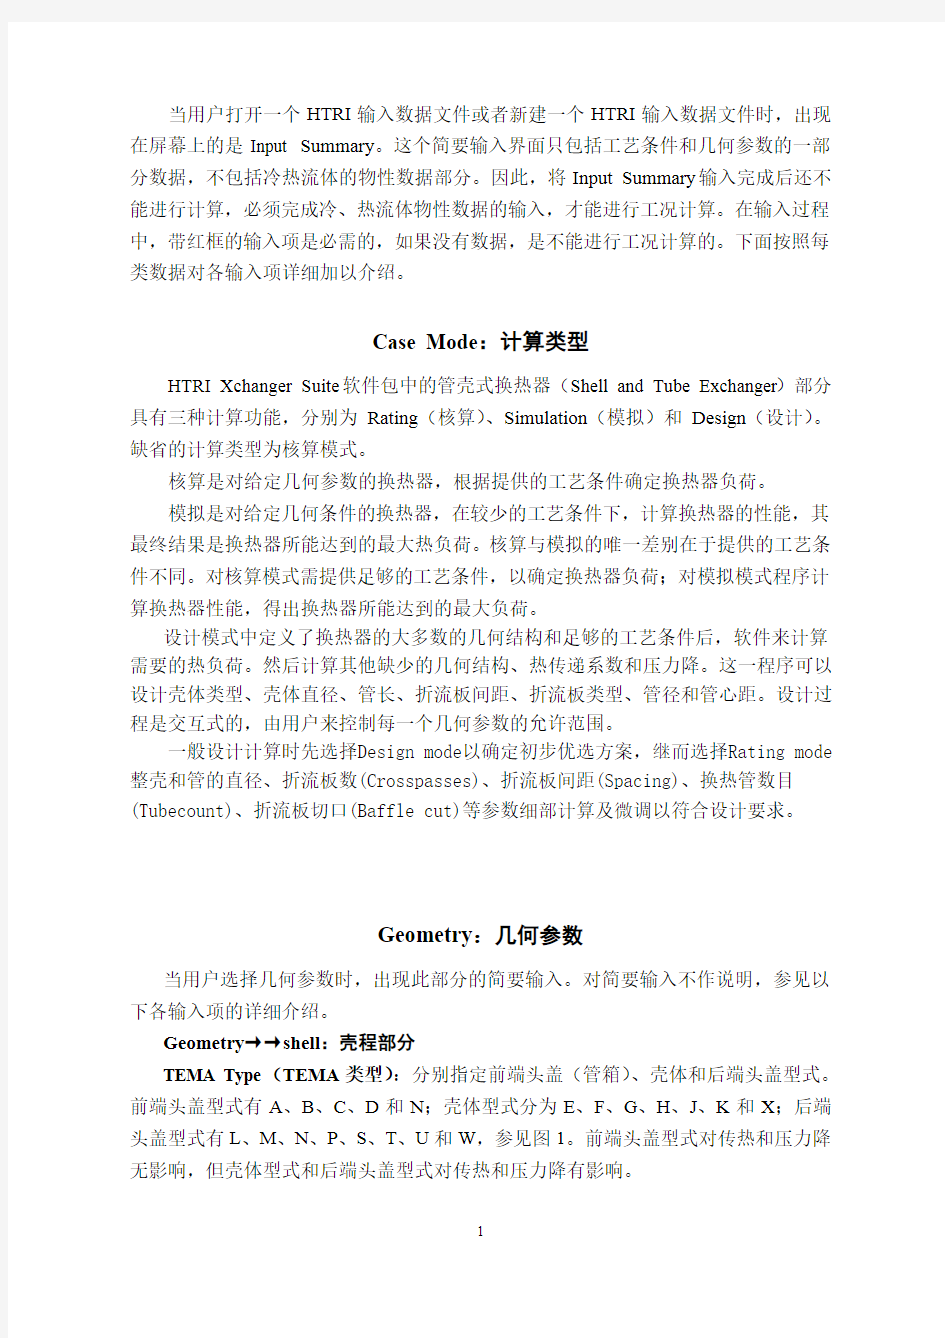 HTRI xchanger Suite 6.0中文用户手册